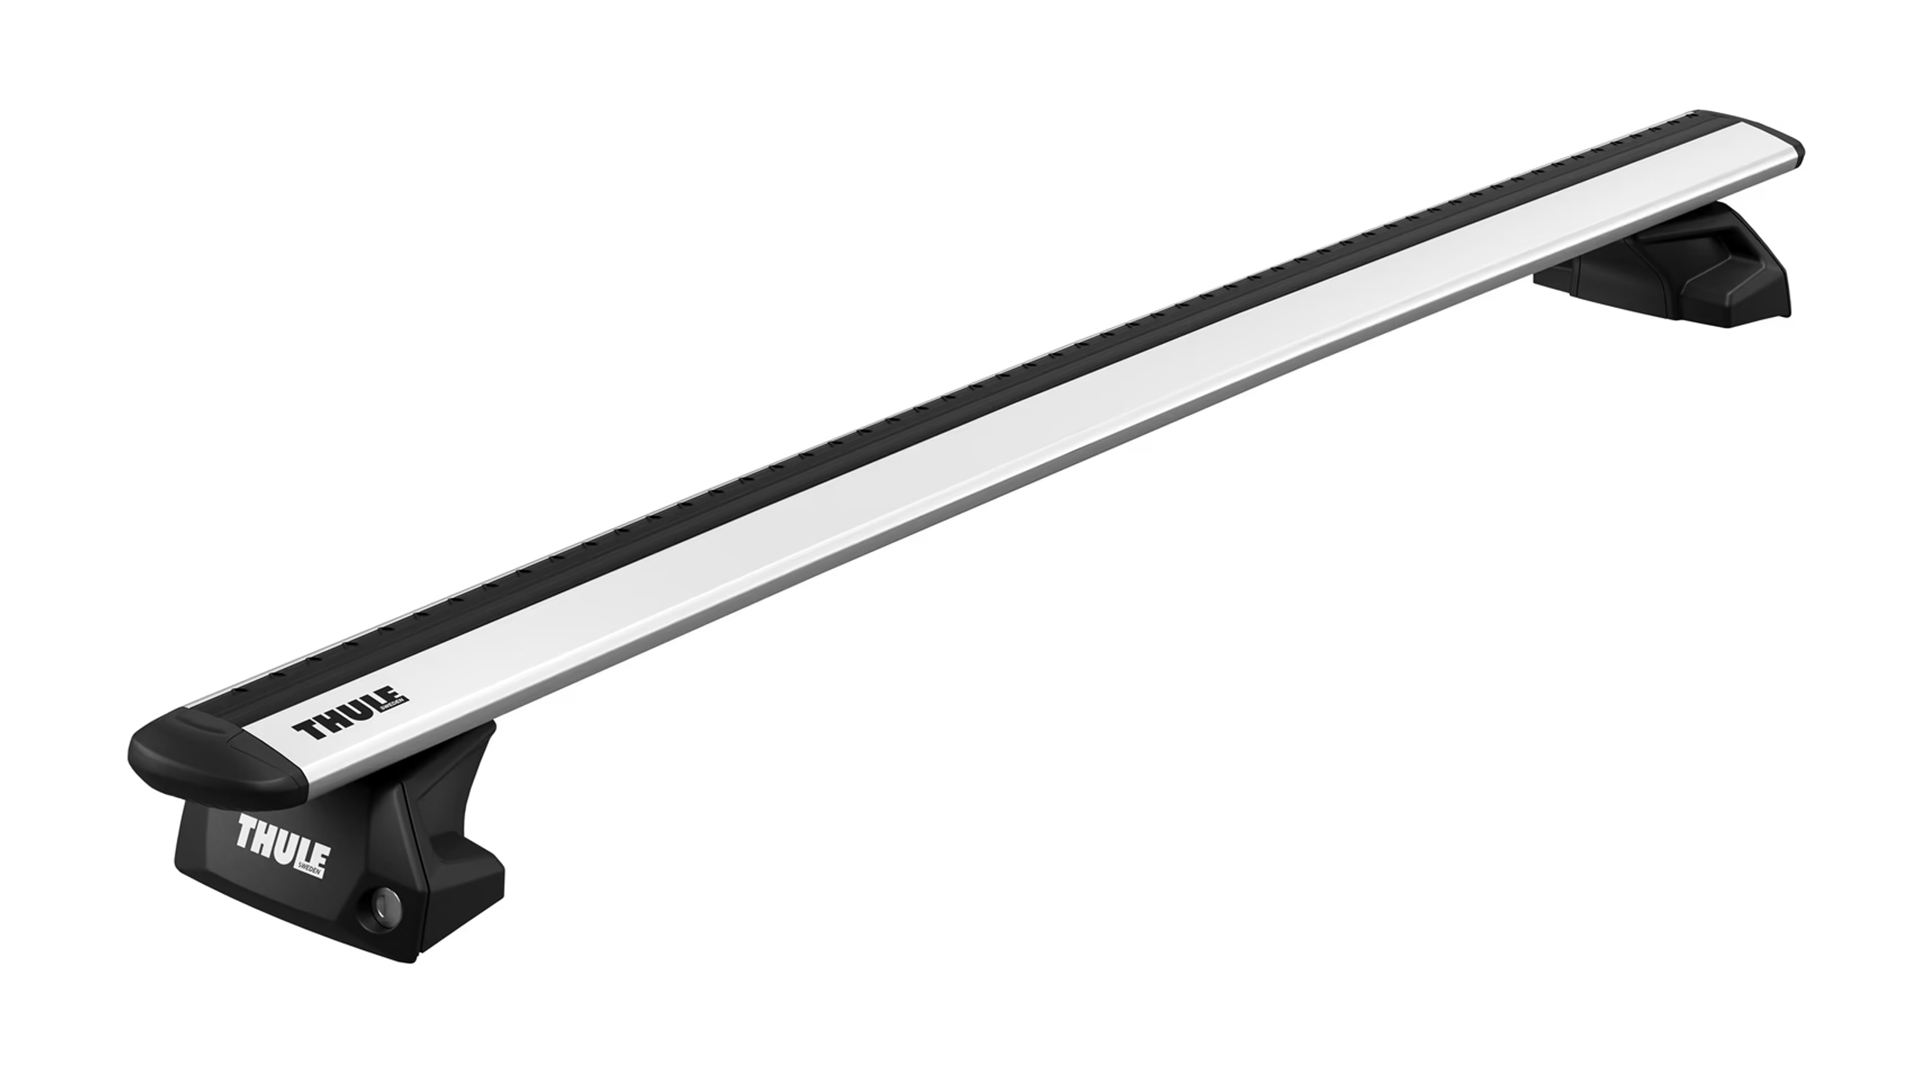 Genesis GV80 shown with roof rack cross bars